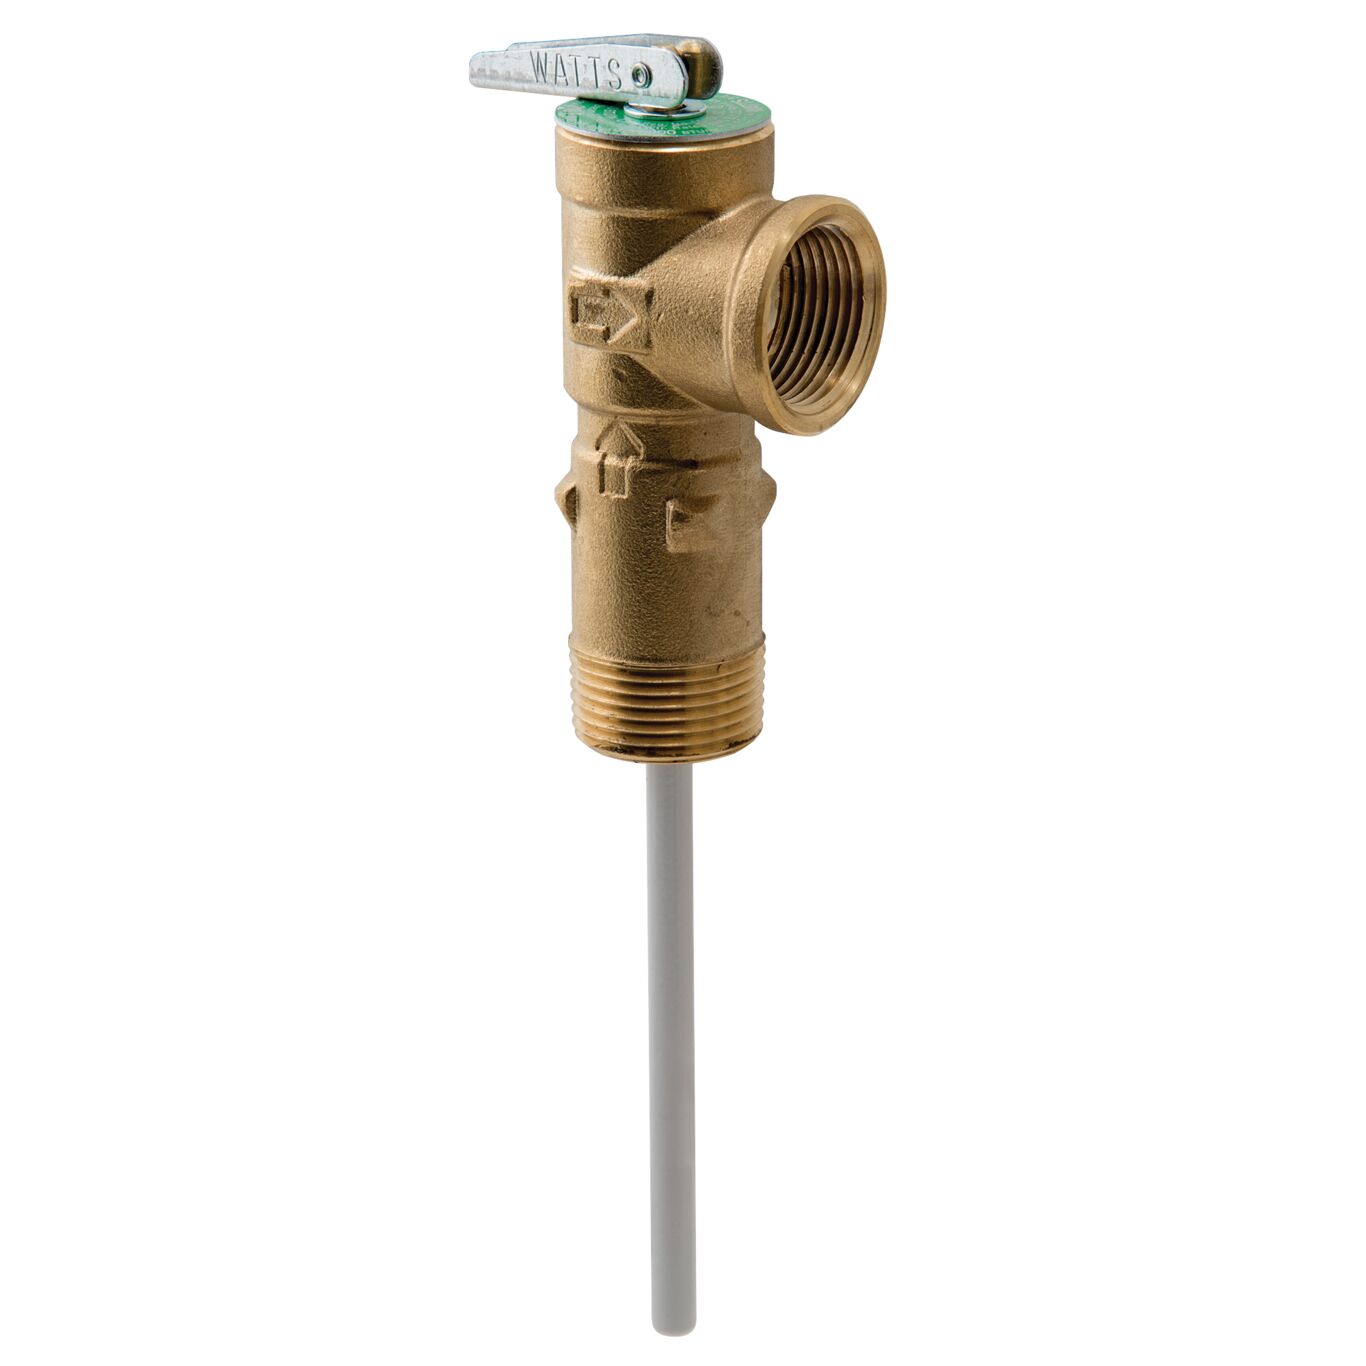 Watts Regulator LFSL100XL Copper Alloy Temperature And Pressure Relief Valve 